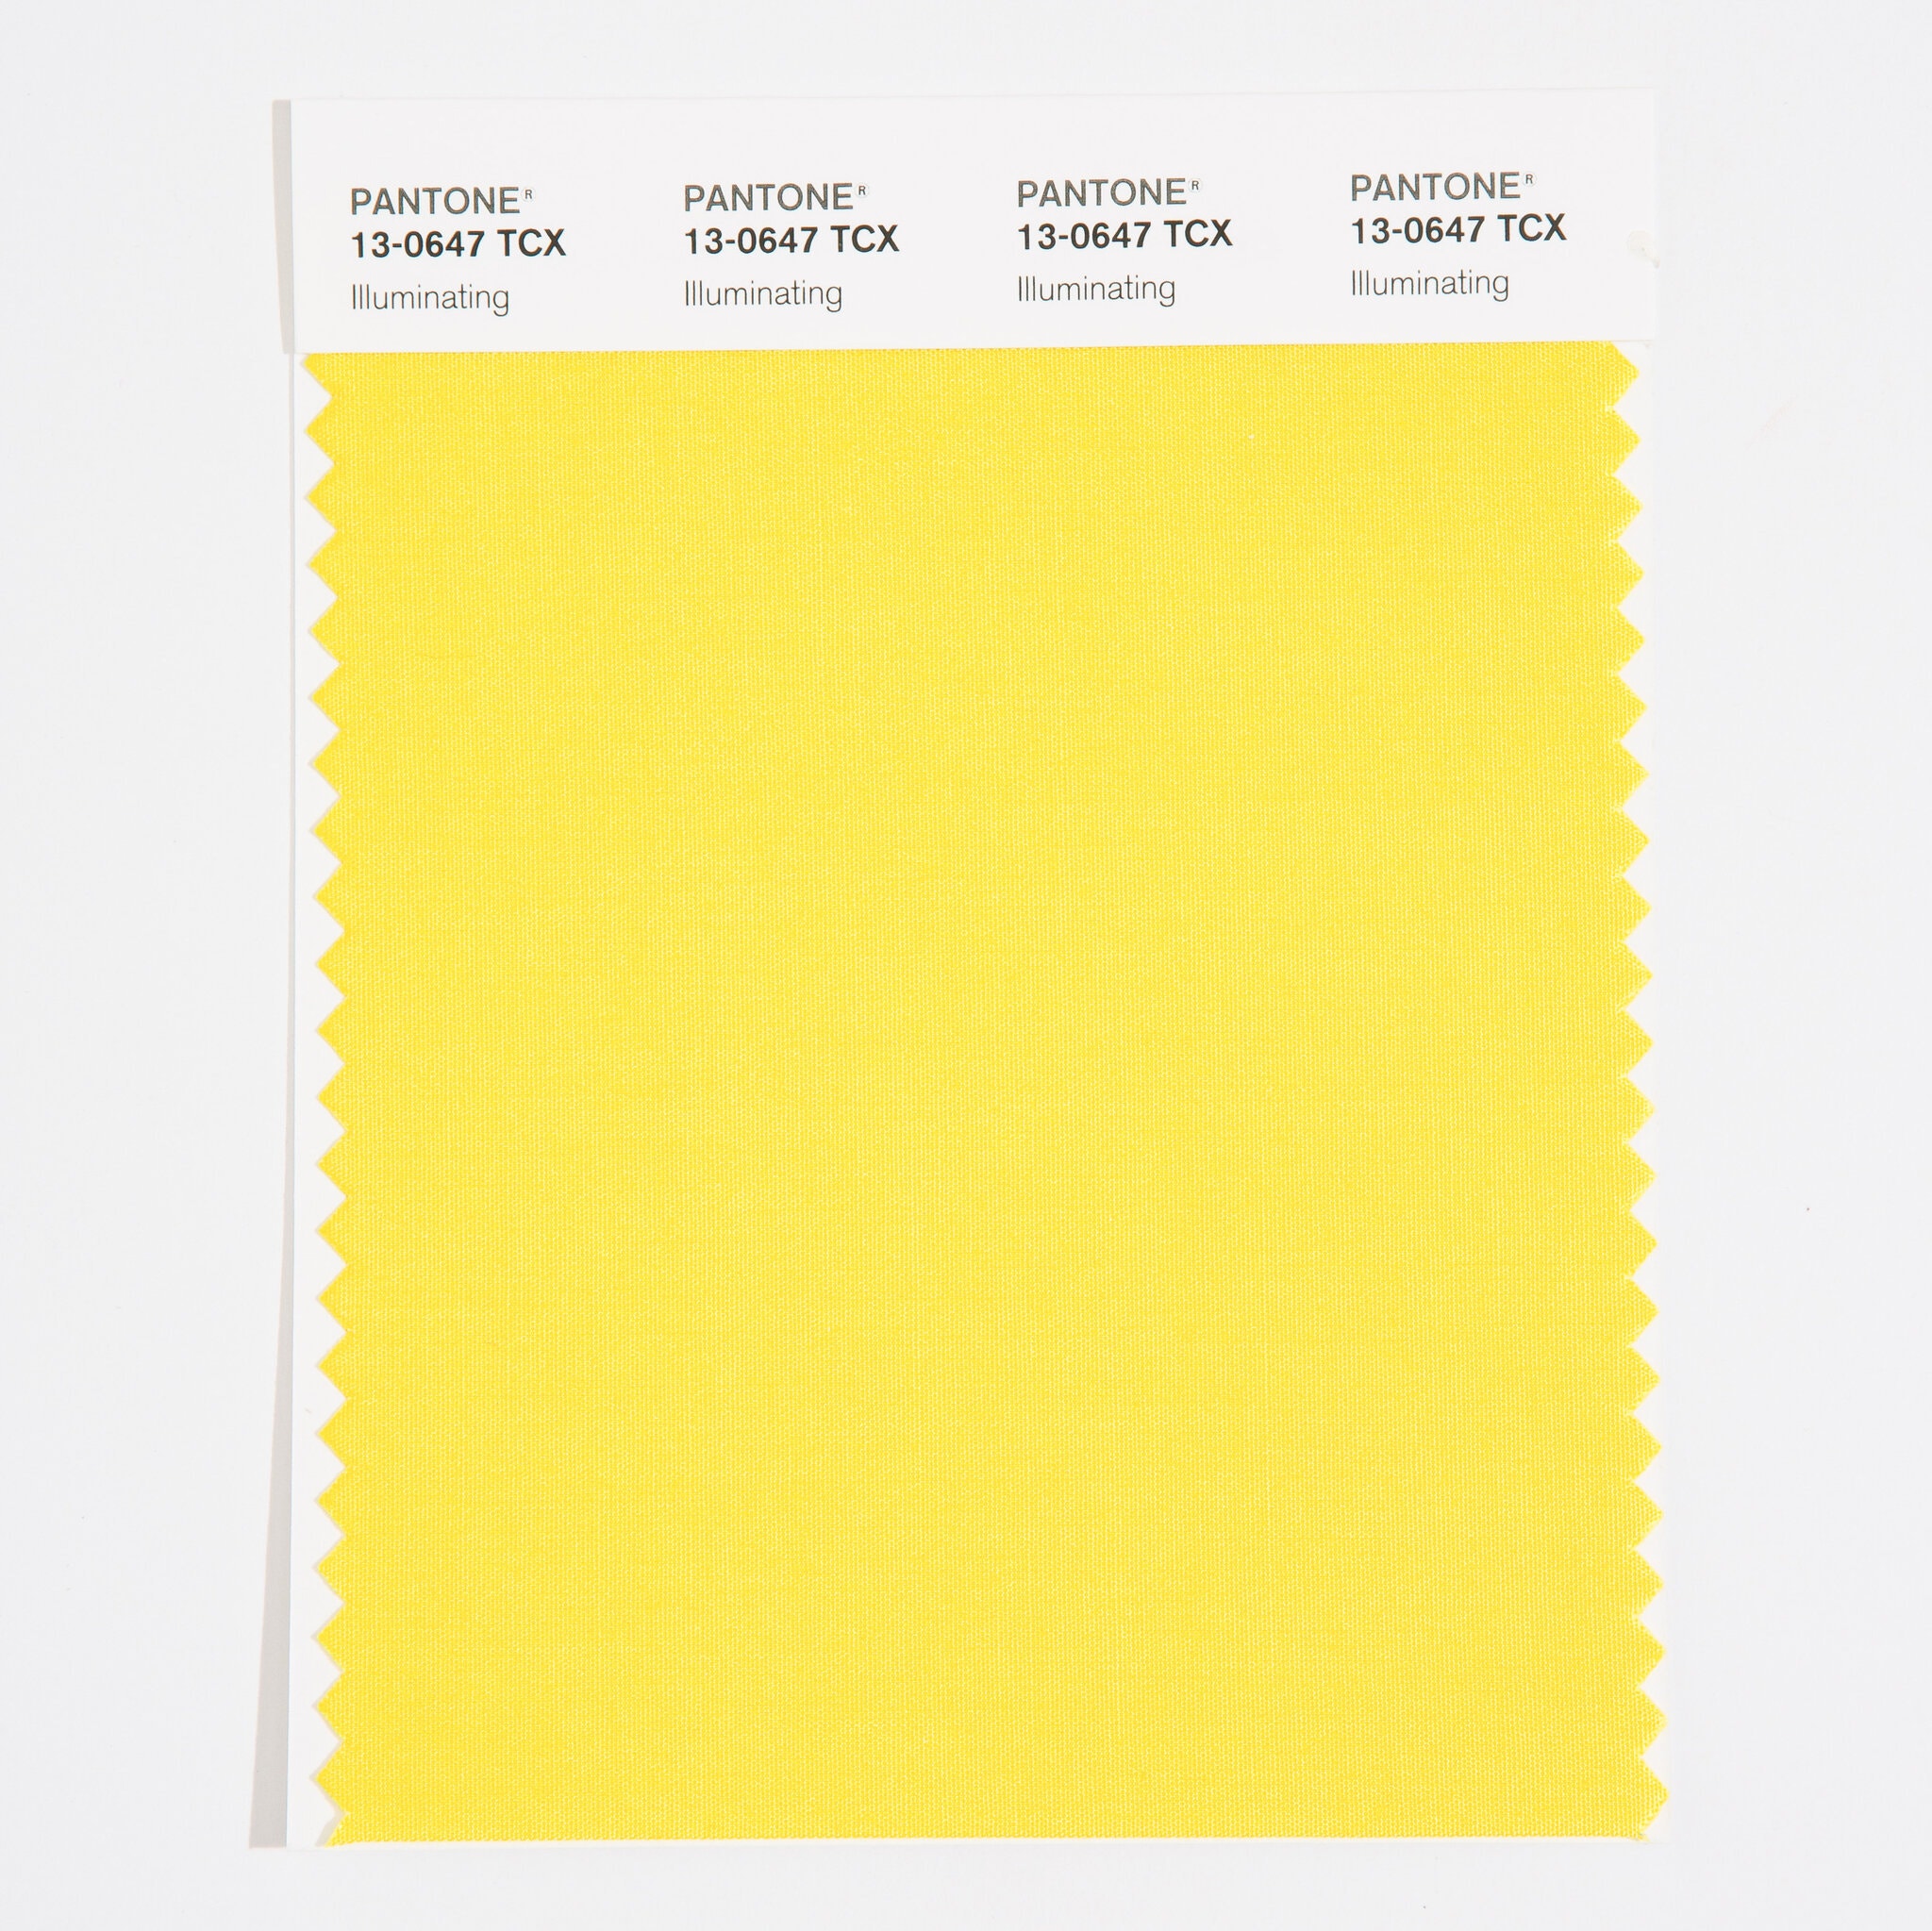 pantone Illuminating yellow 2021